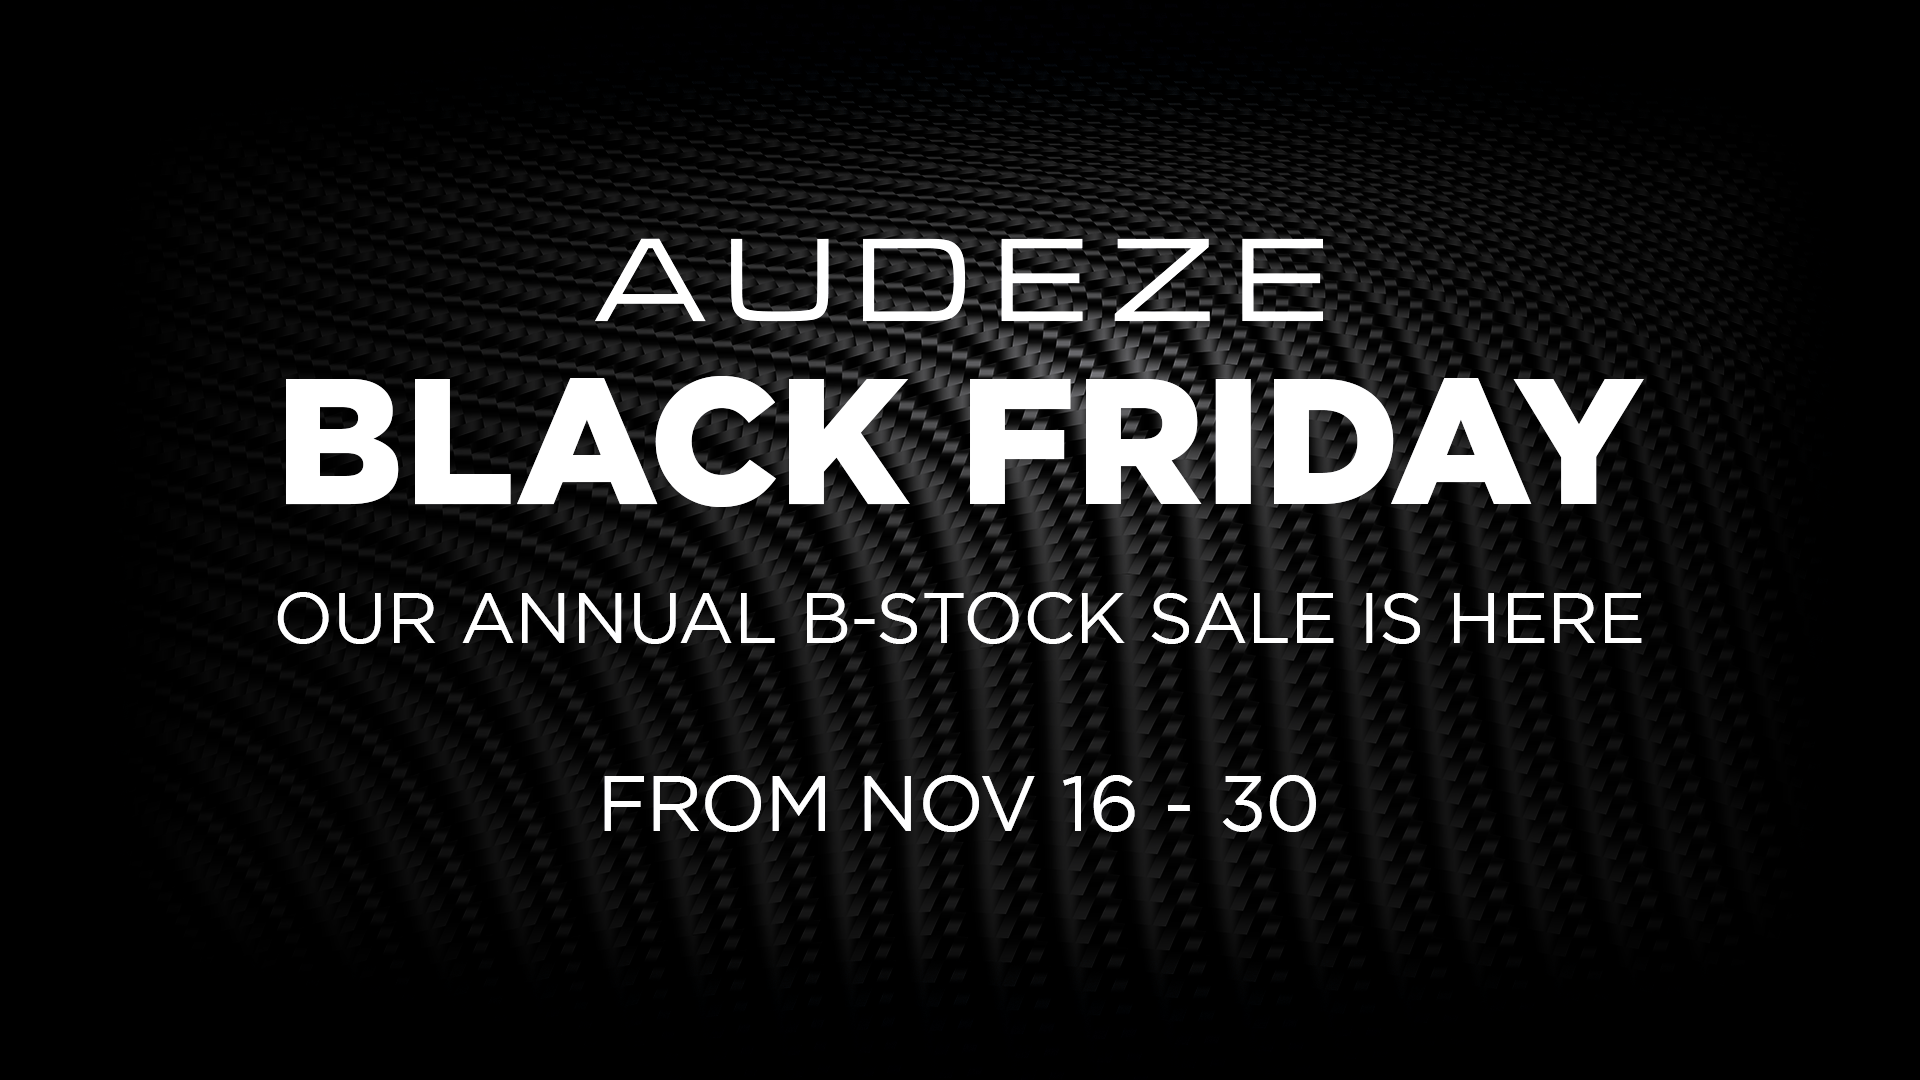 Audeze Black Friday Annual B-Stock Sale